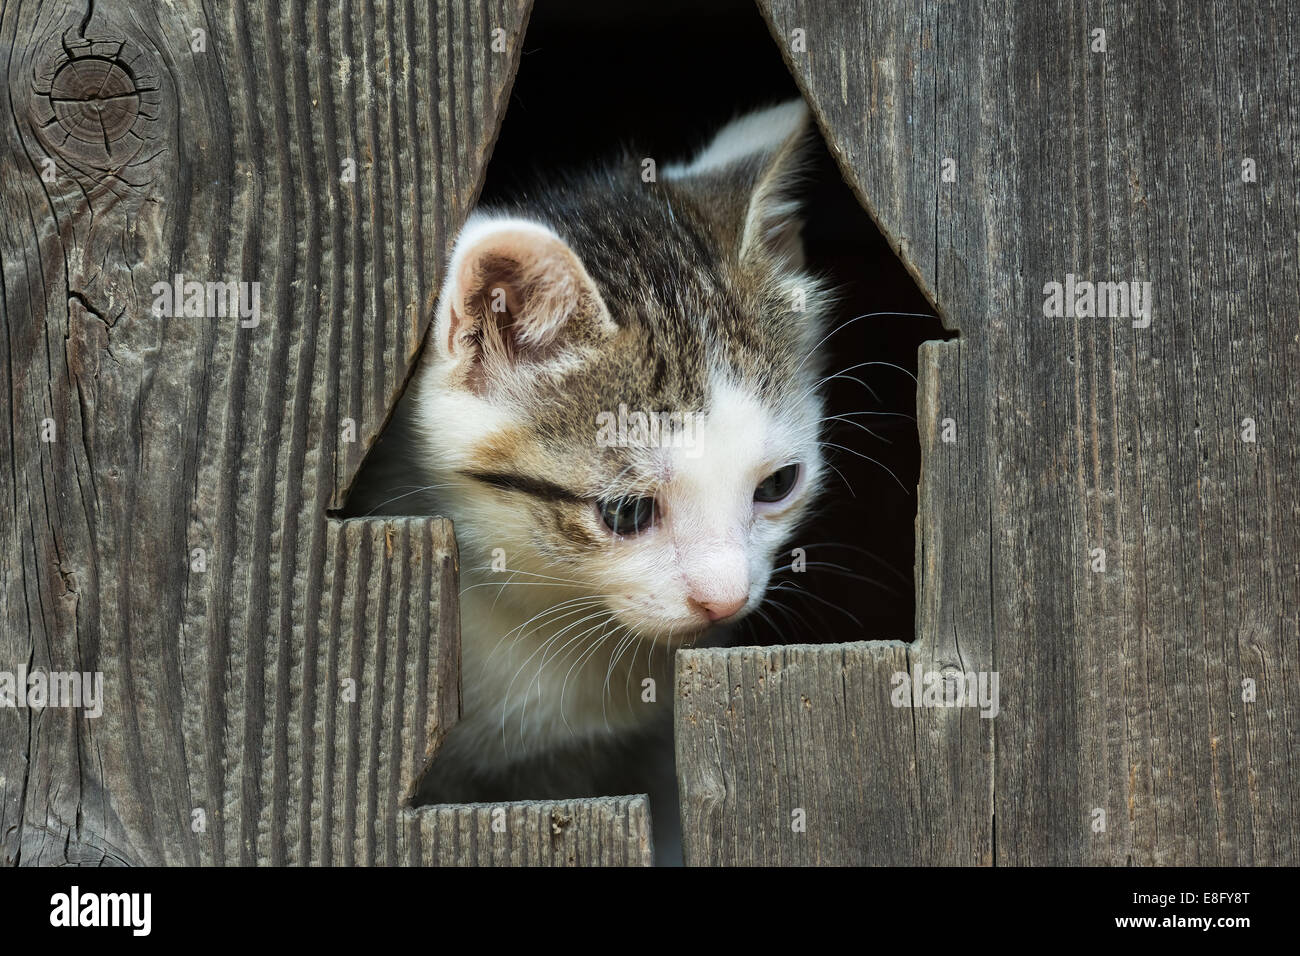 Cute Small Baby Kitty Cat Portrait Stock Photo